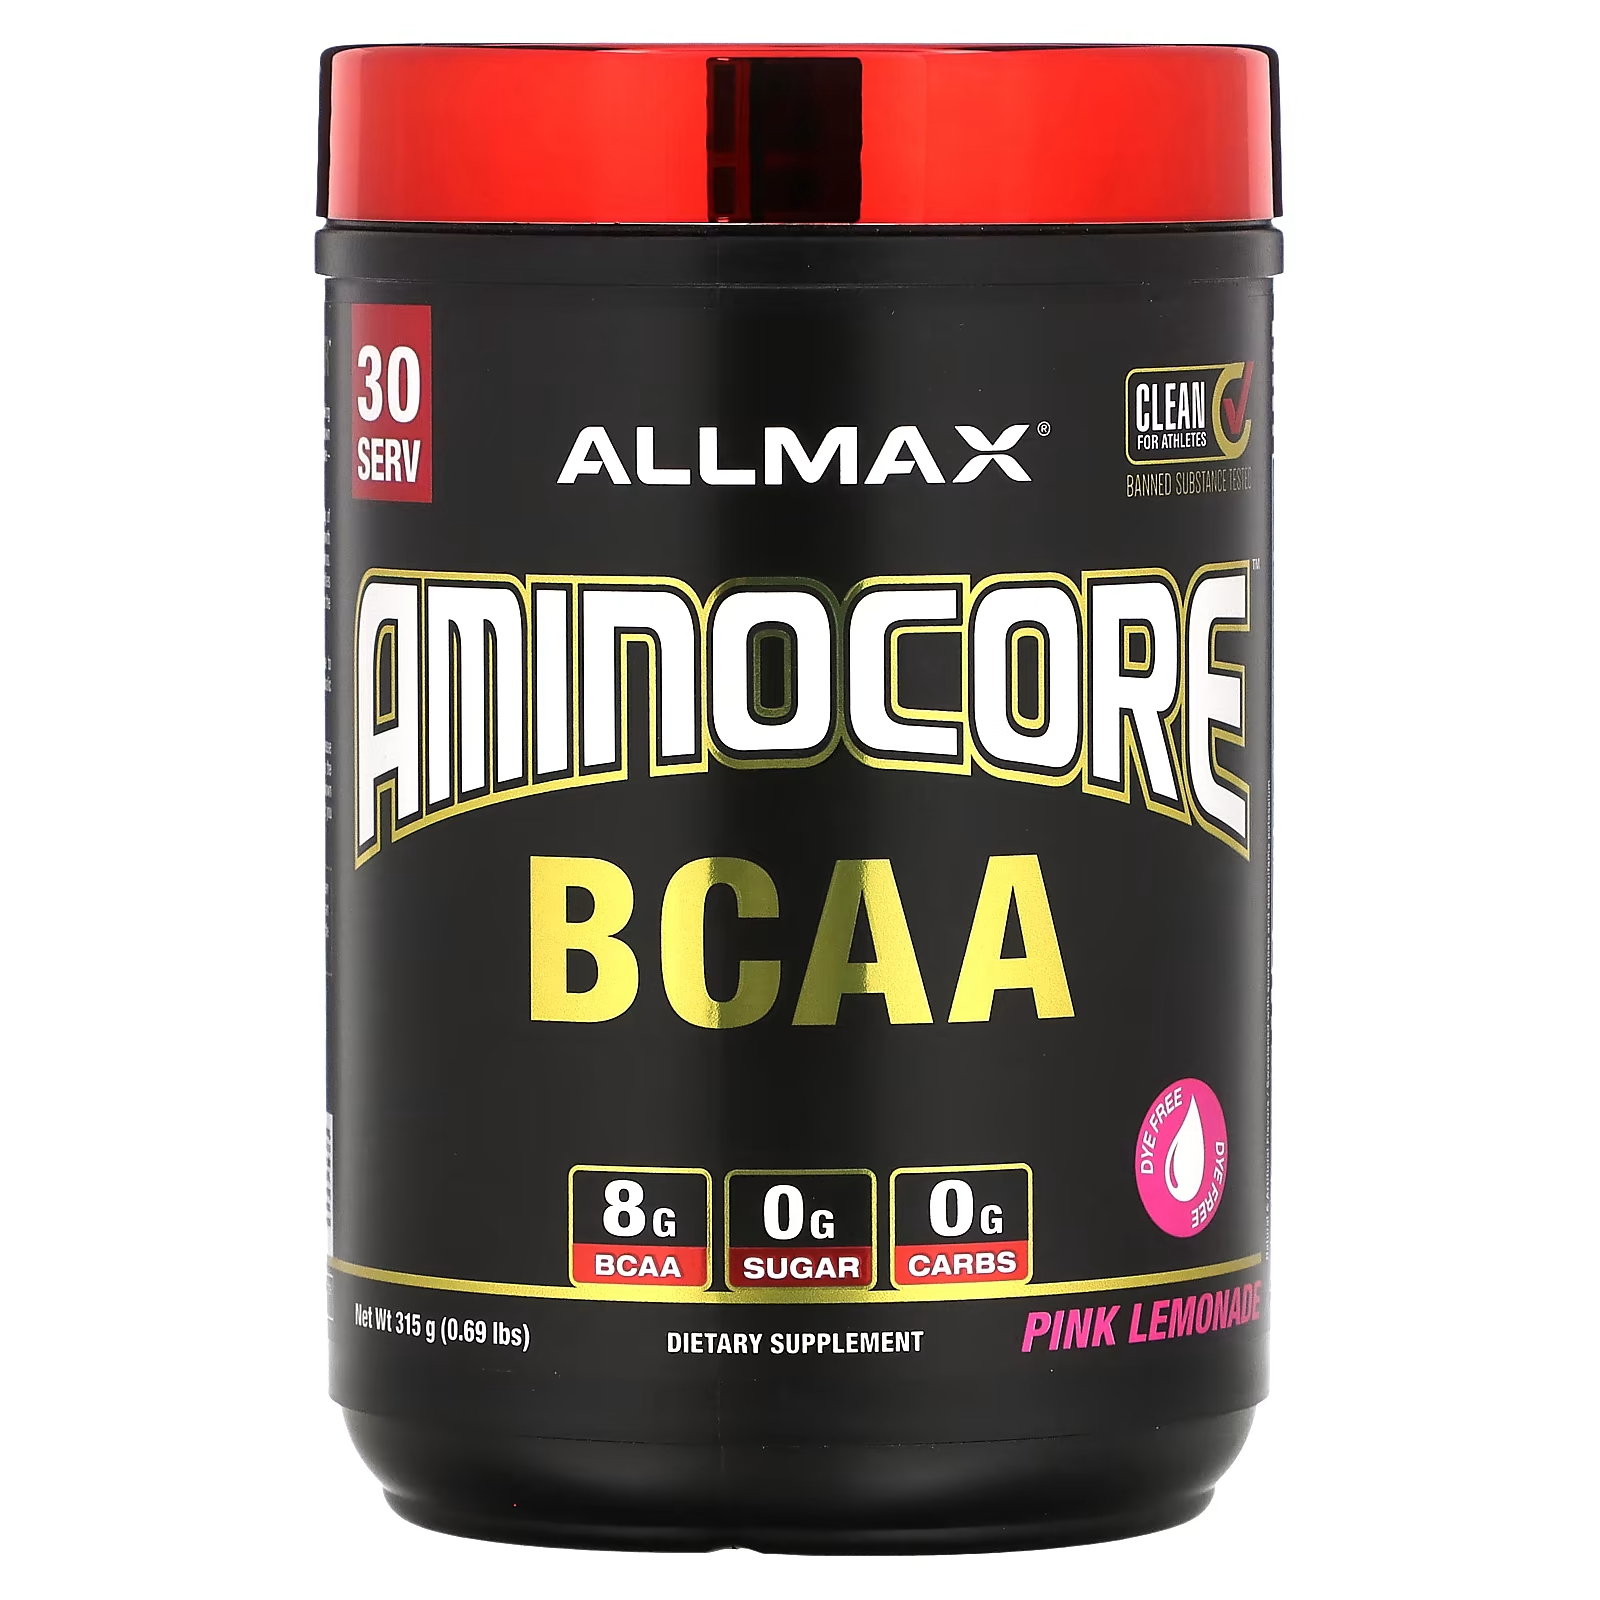 Пищевая добавка ALLMAX AMINOCORE BCAA, розовый лимонад пищевая добавка allmax aminocore bcaa голубая малина